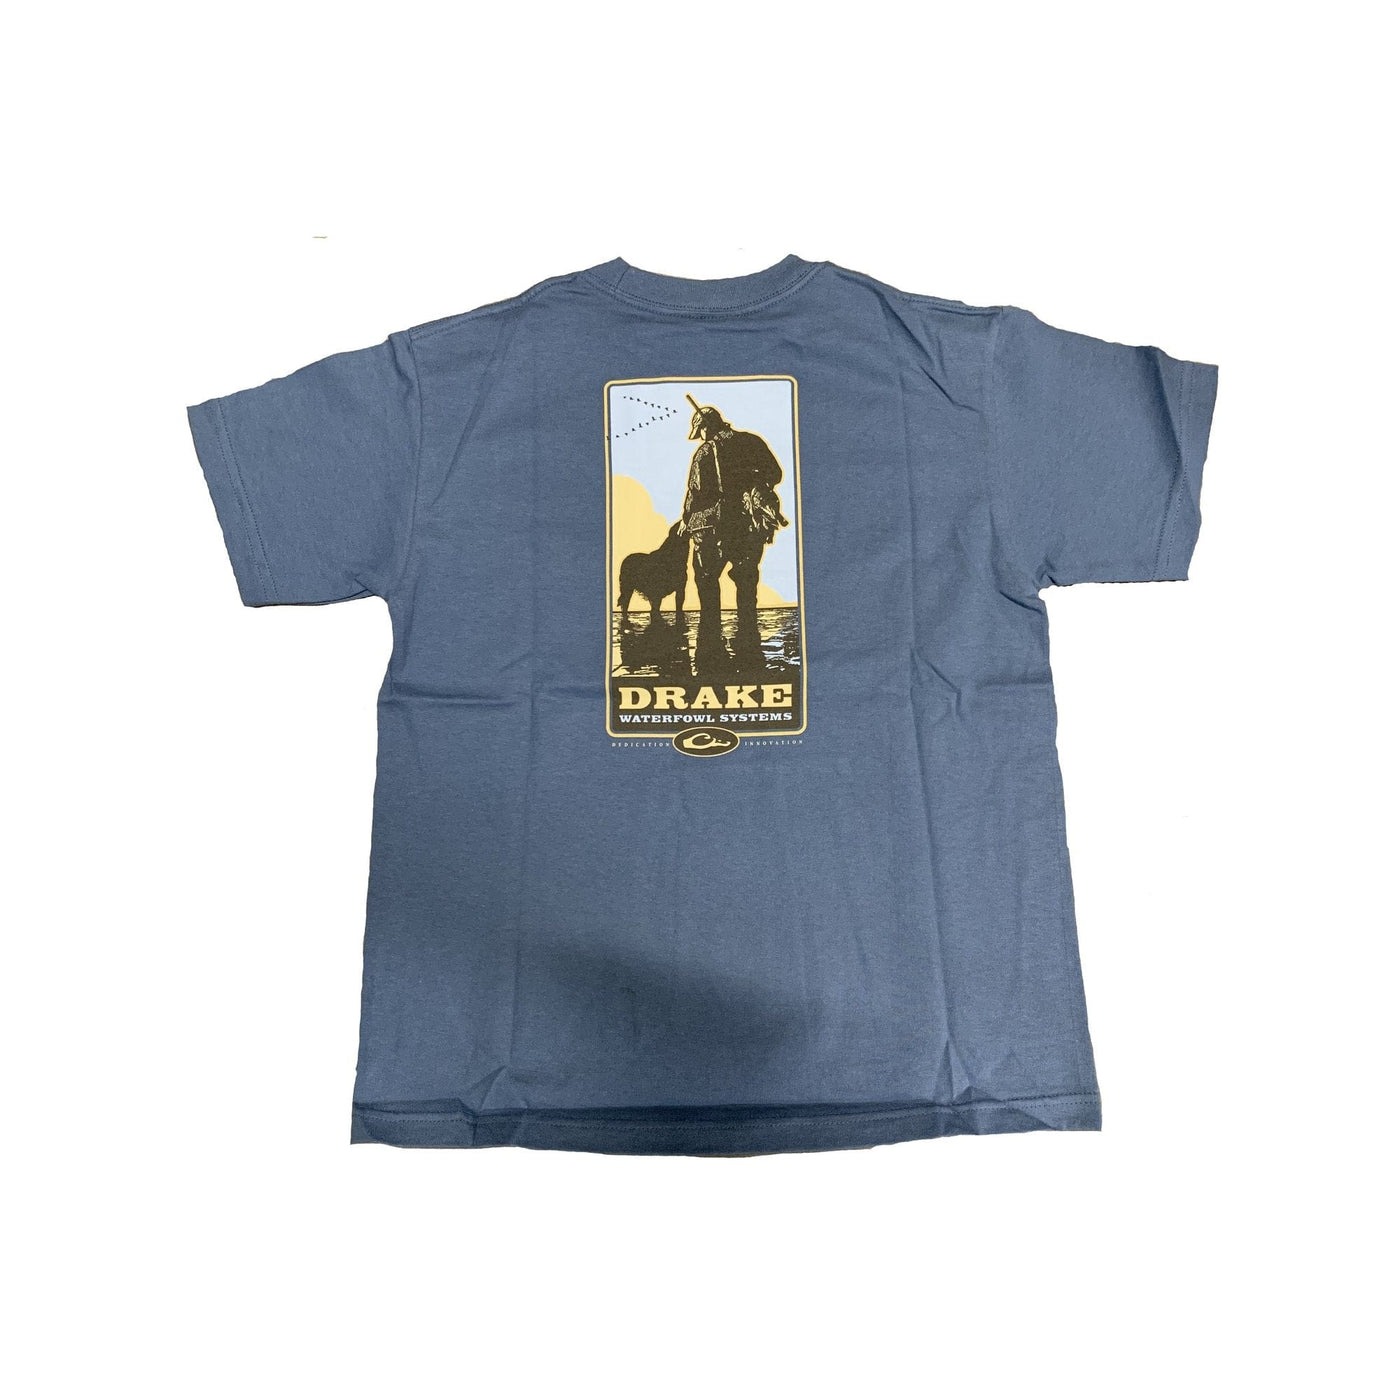 Drake Drake Young Gun Man's Best Friend Tee Shirt - CLOSEOUT Blue / Small Clothing